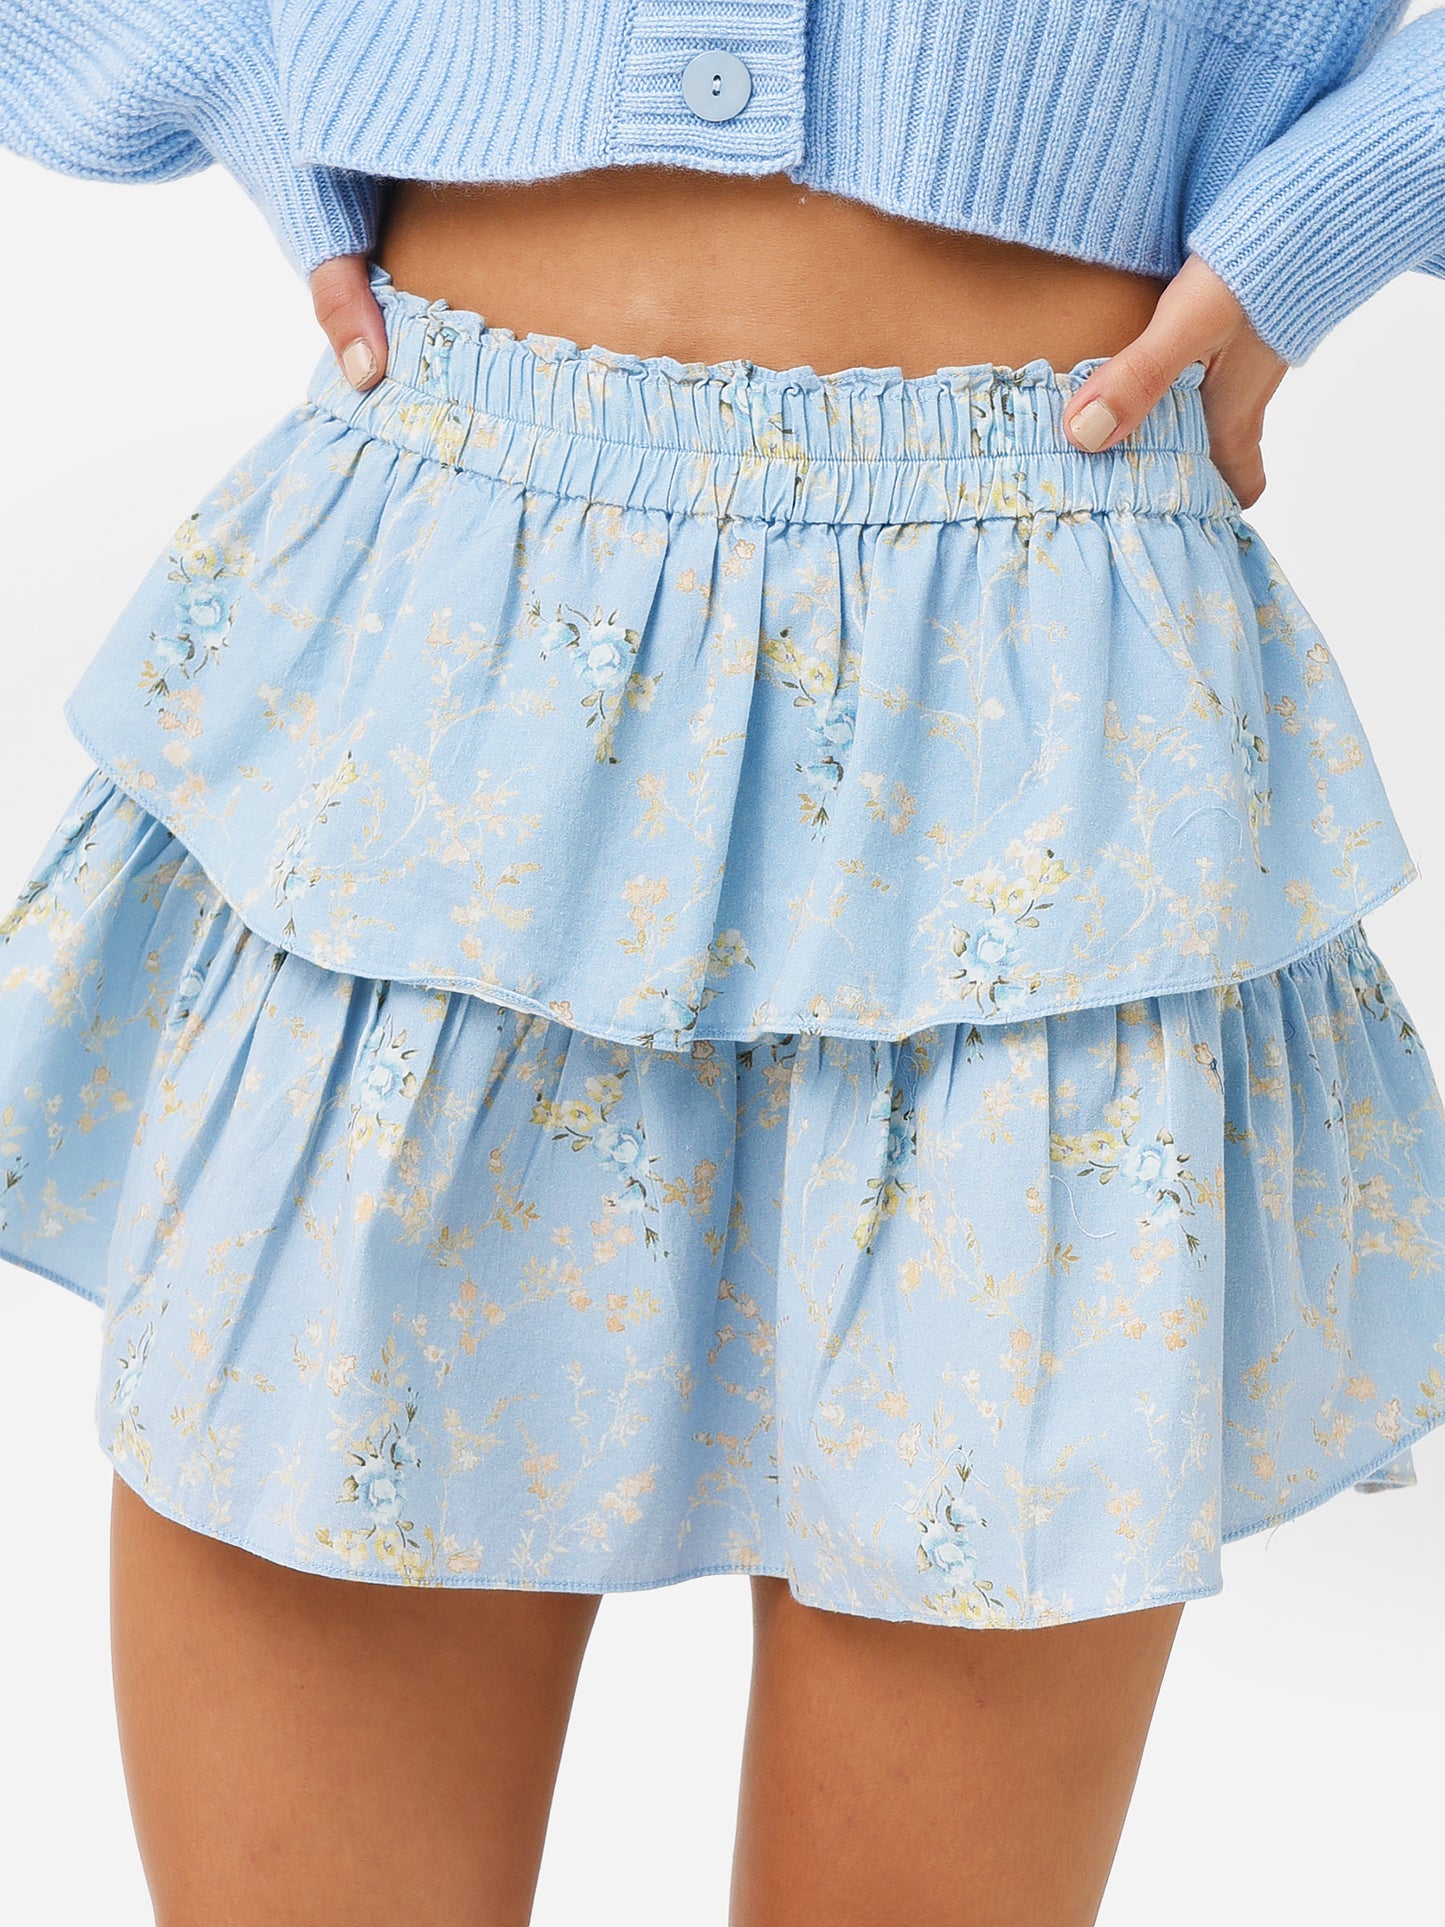 LoveShackFancy Women's Ruffle Mini Skirt